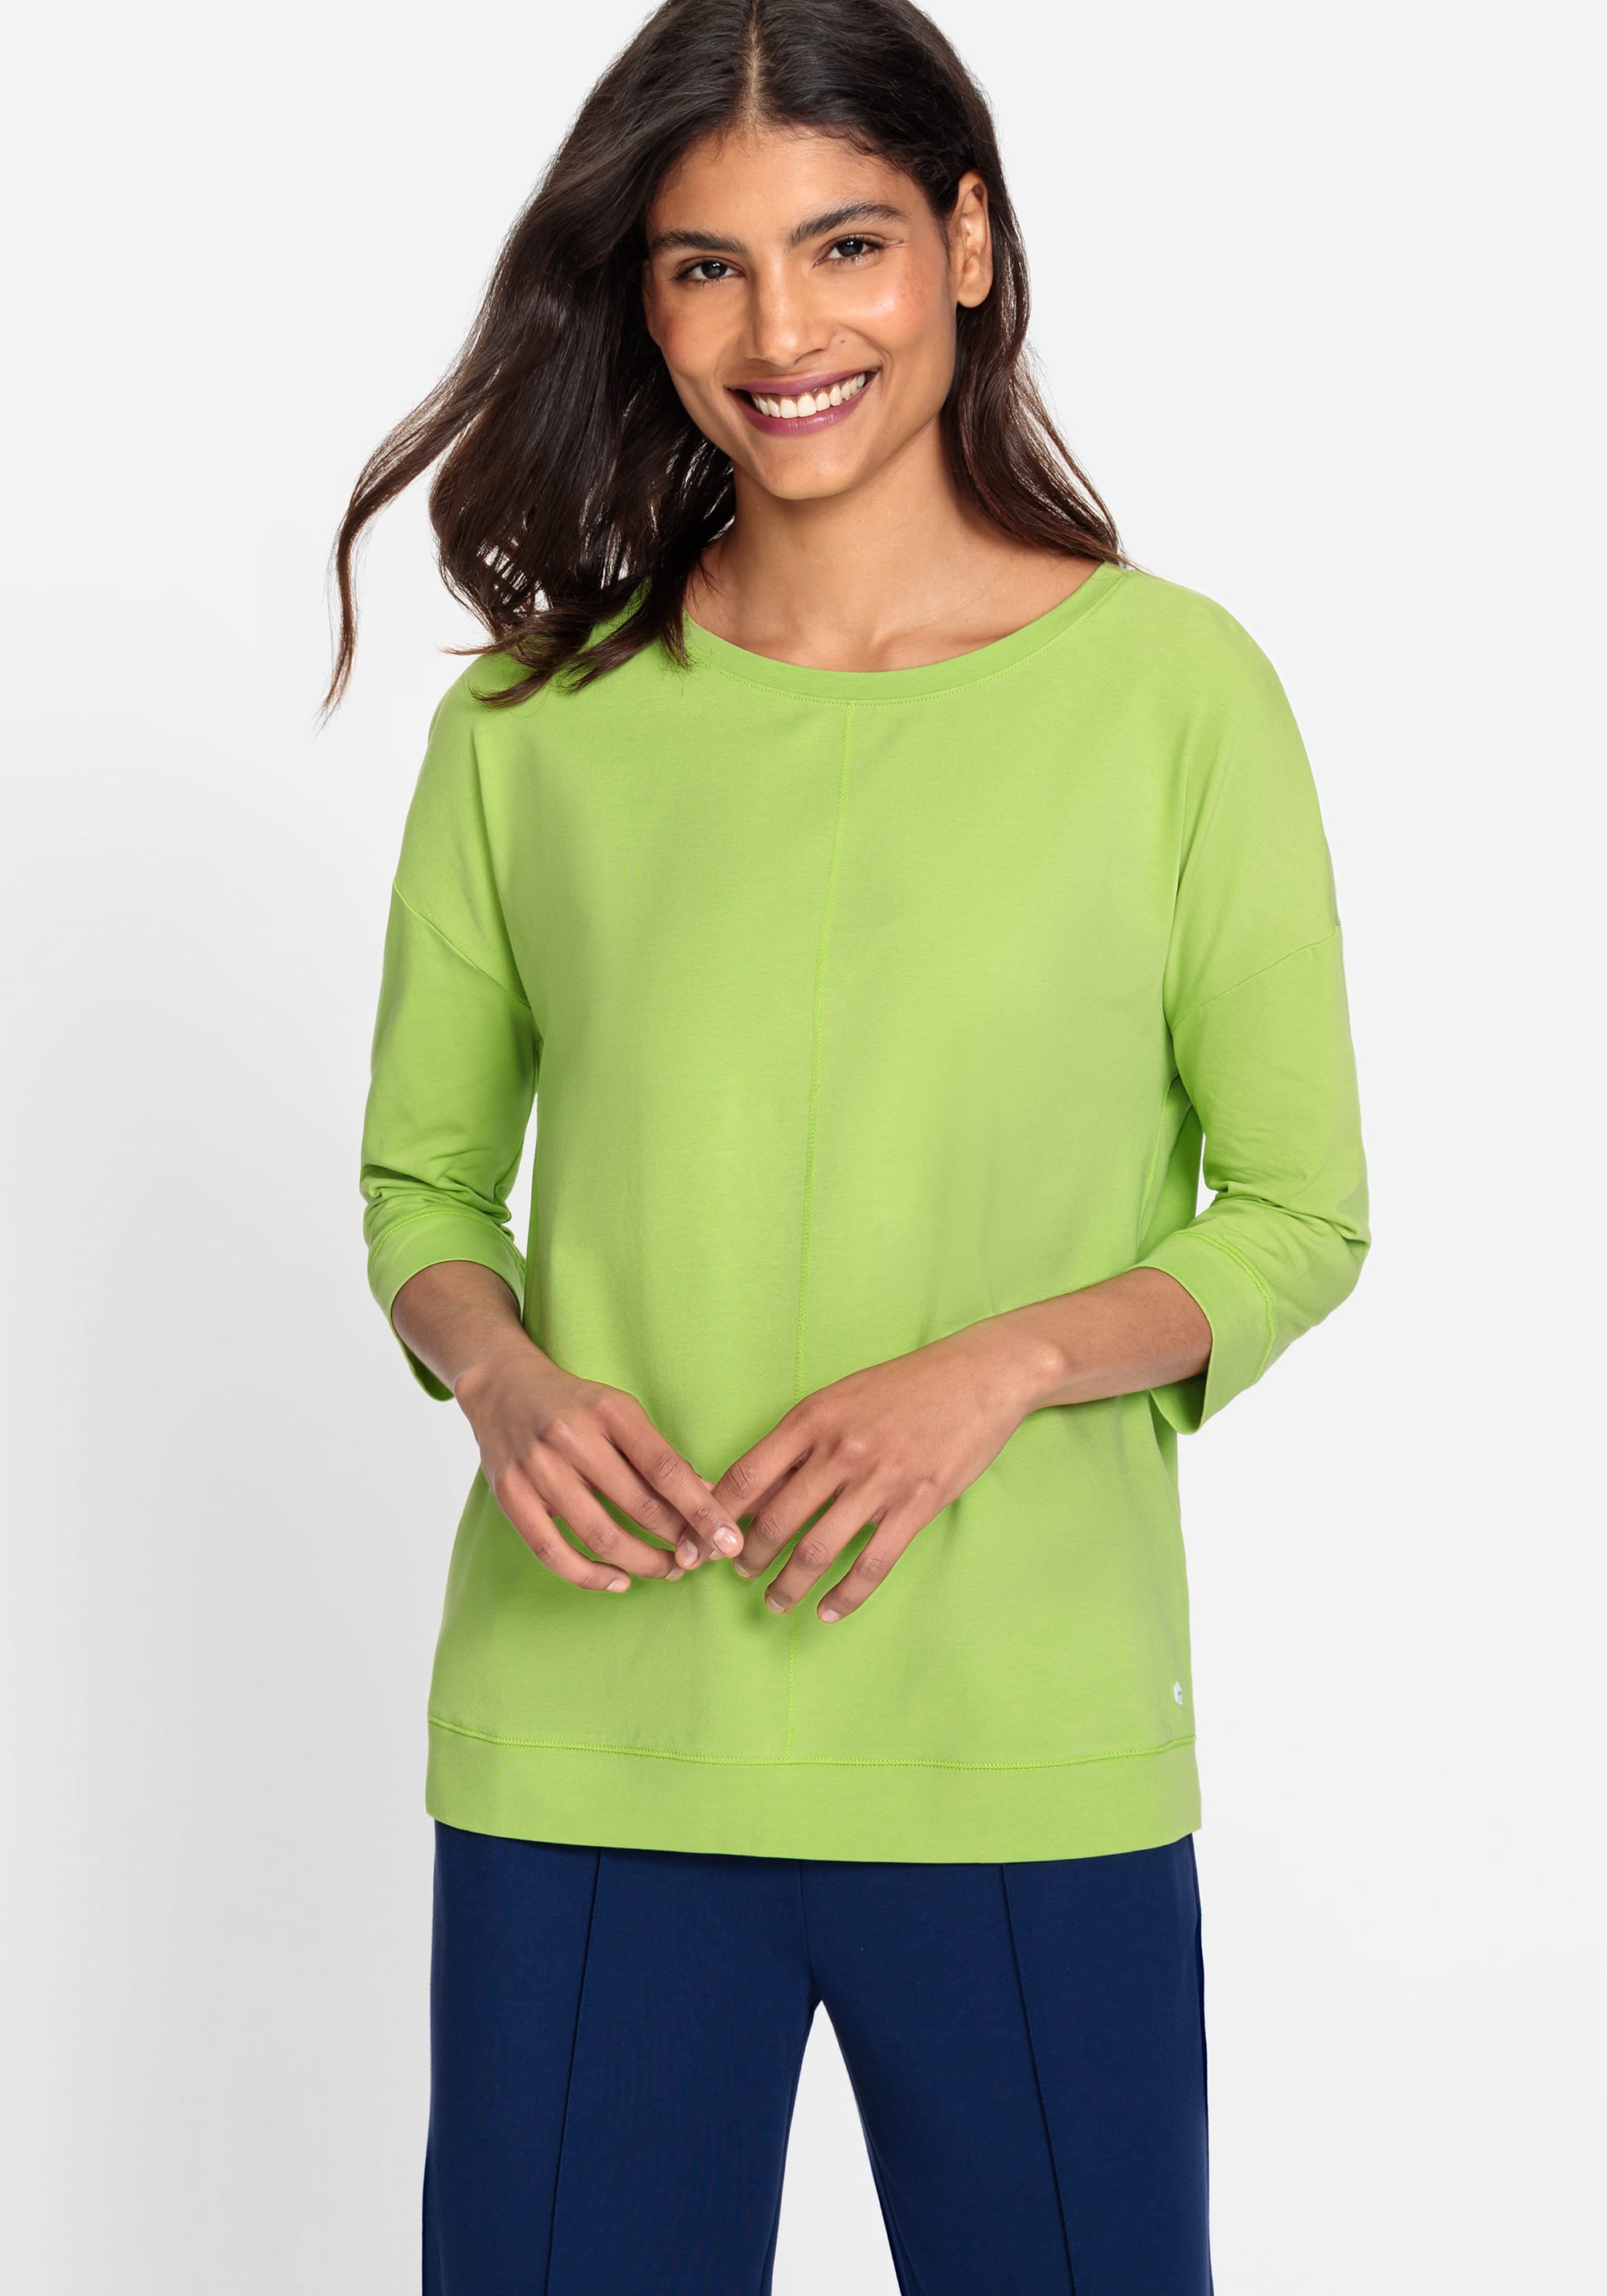 Classic-Fit Cotton-Blend T-Shirt, Women's Short Sleeve Shirts & Tee's